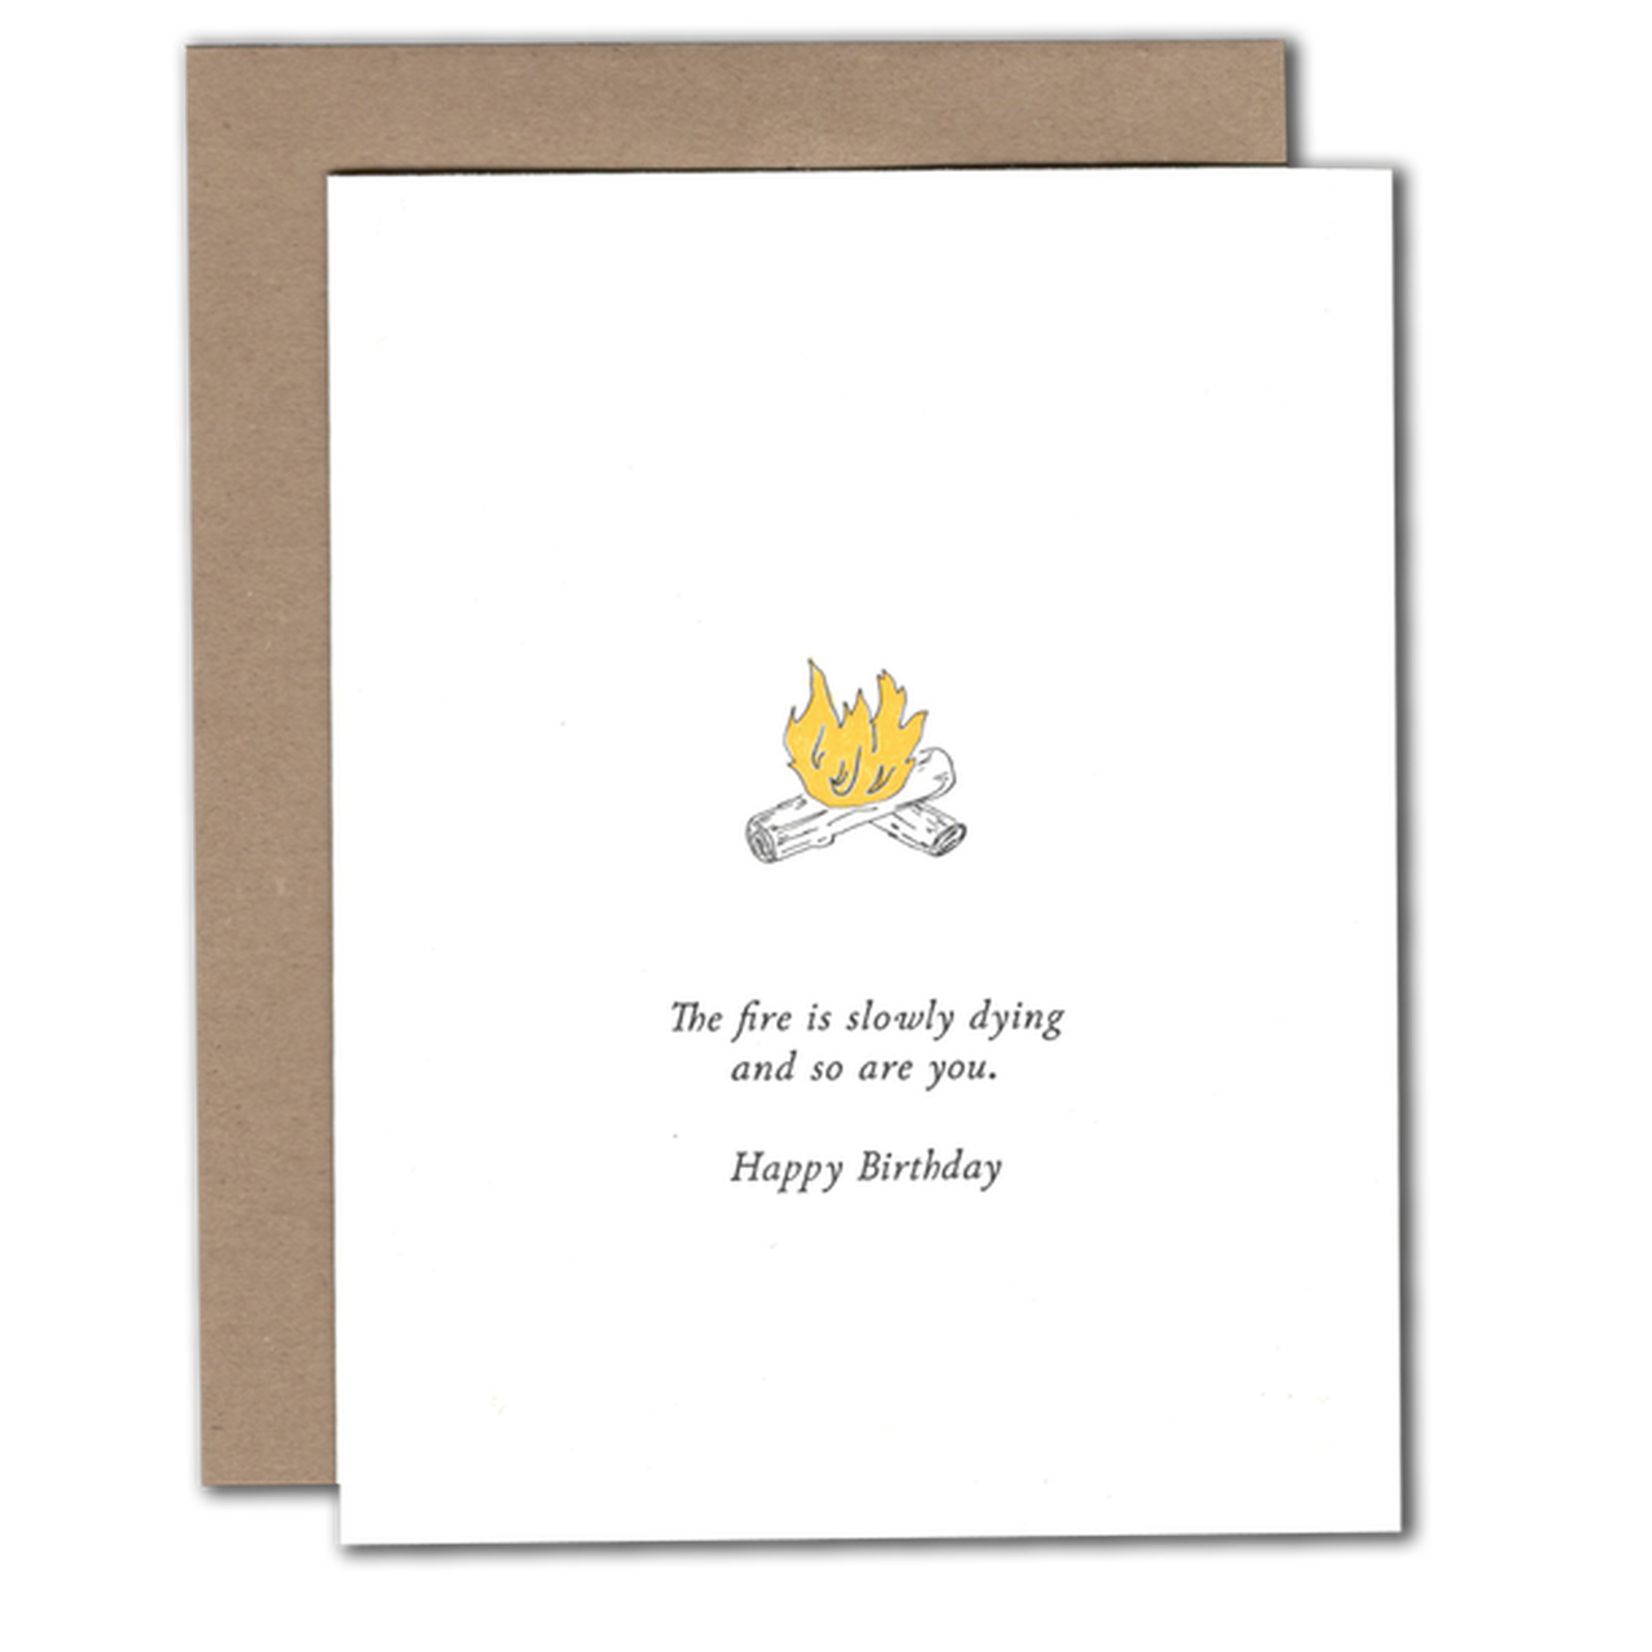 Power & Light Press Fire Slowly Dying Birthday Greeting Card